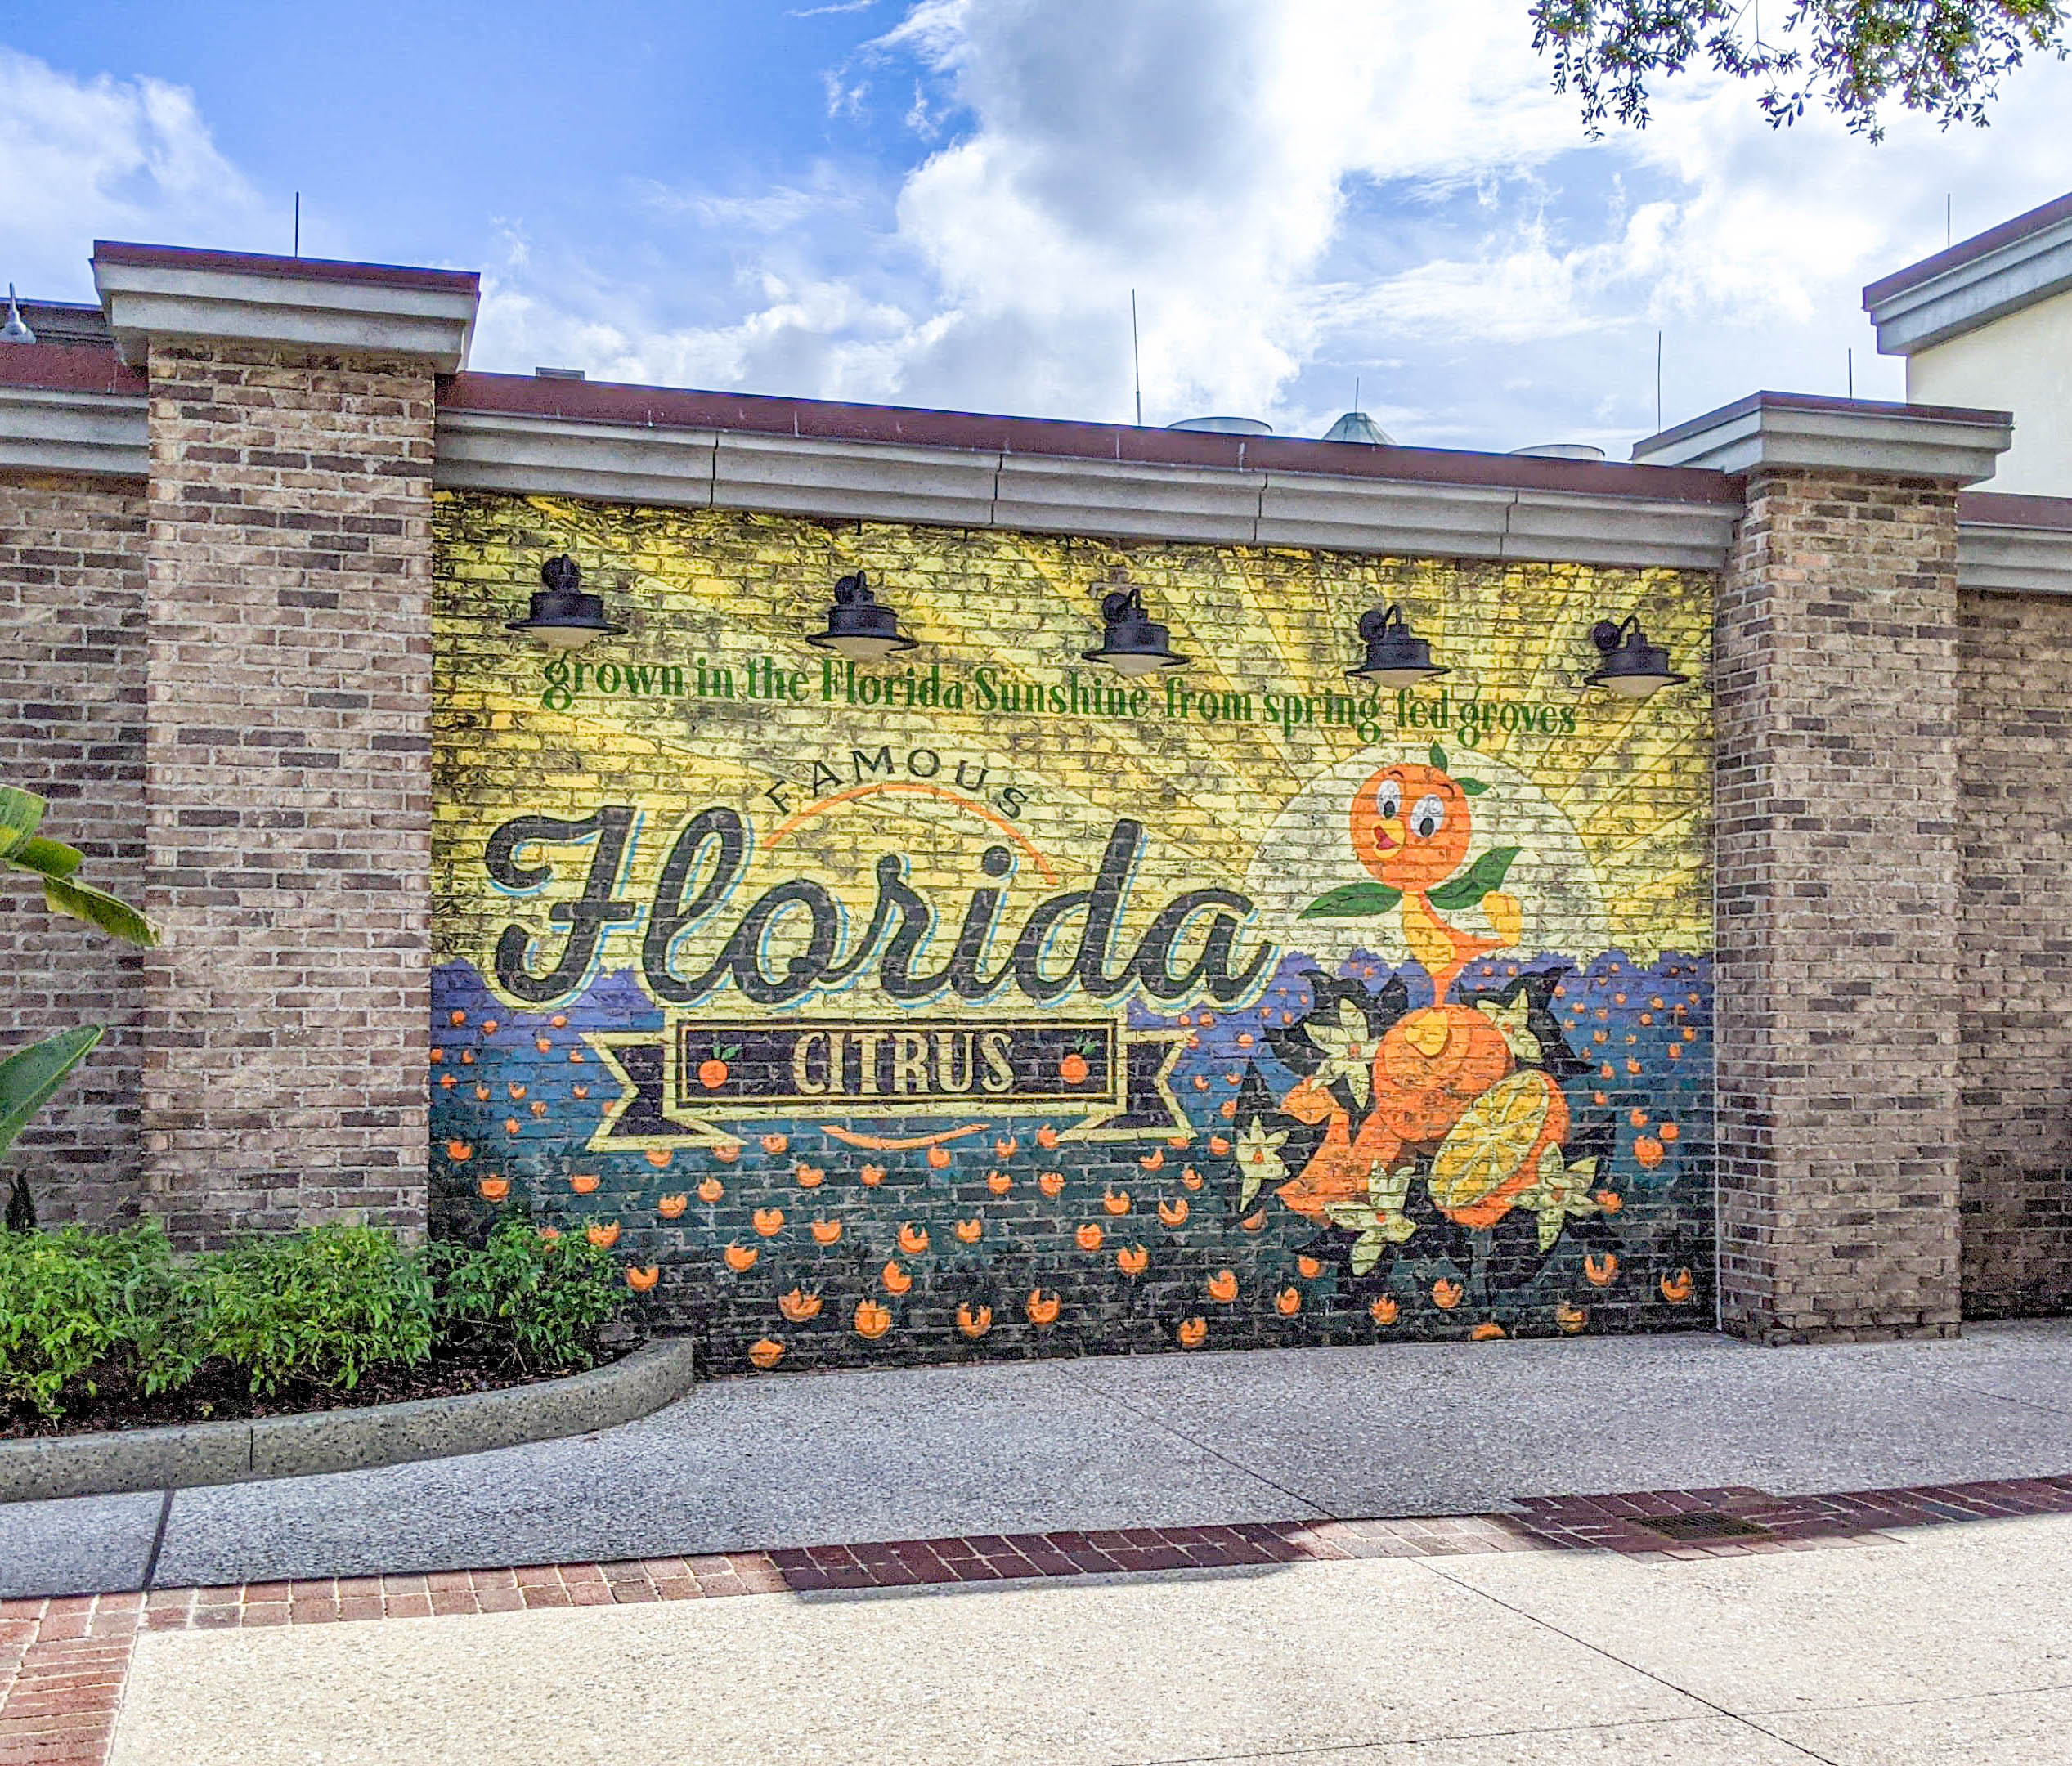 8 Best Theme Parks in Orlando, Florida